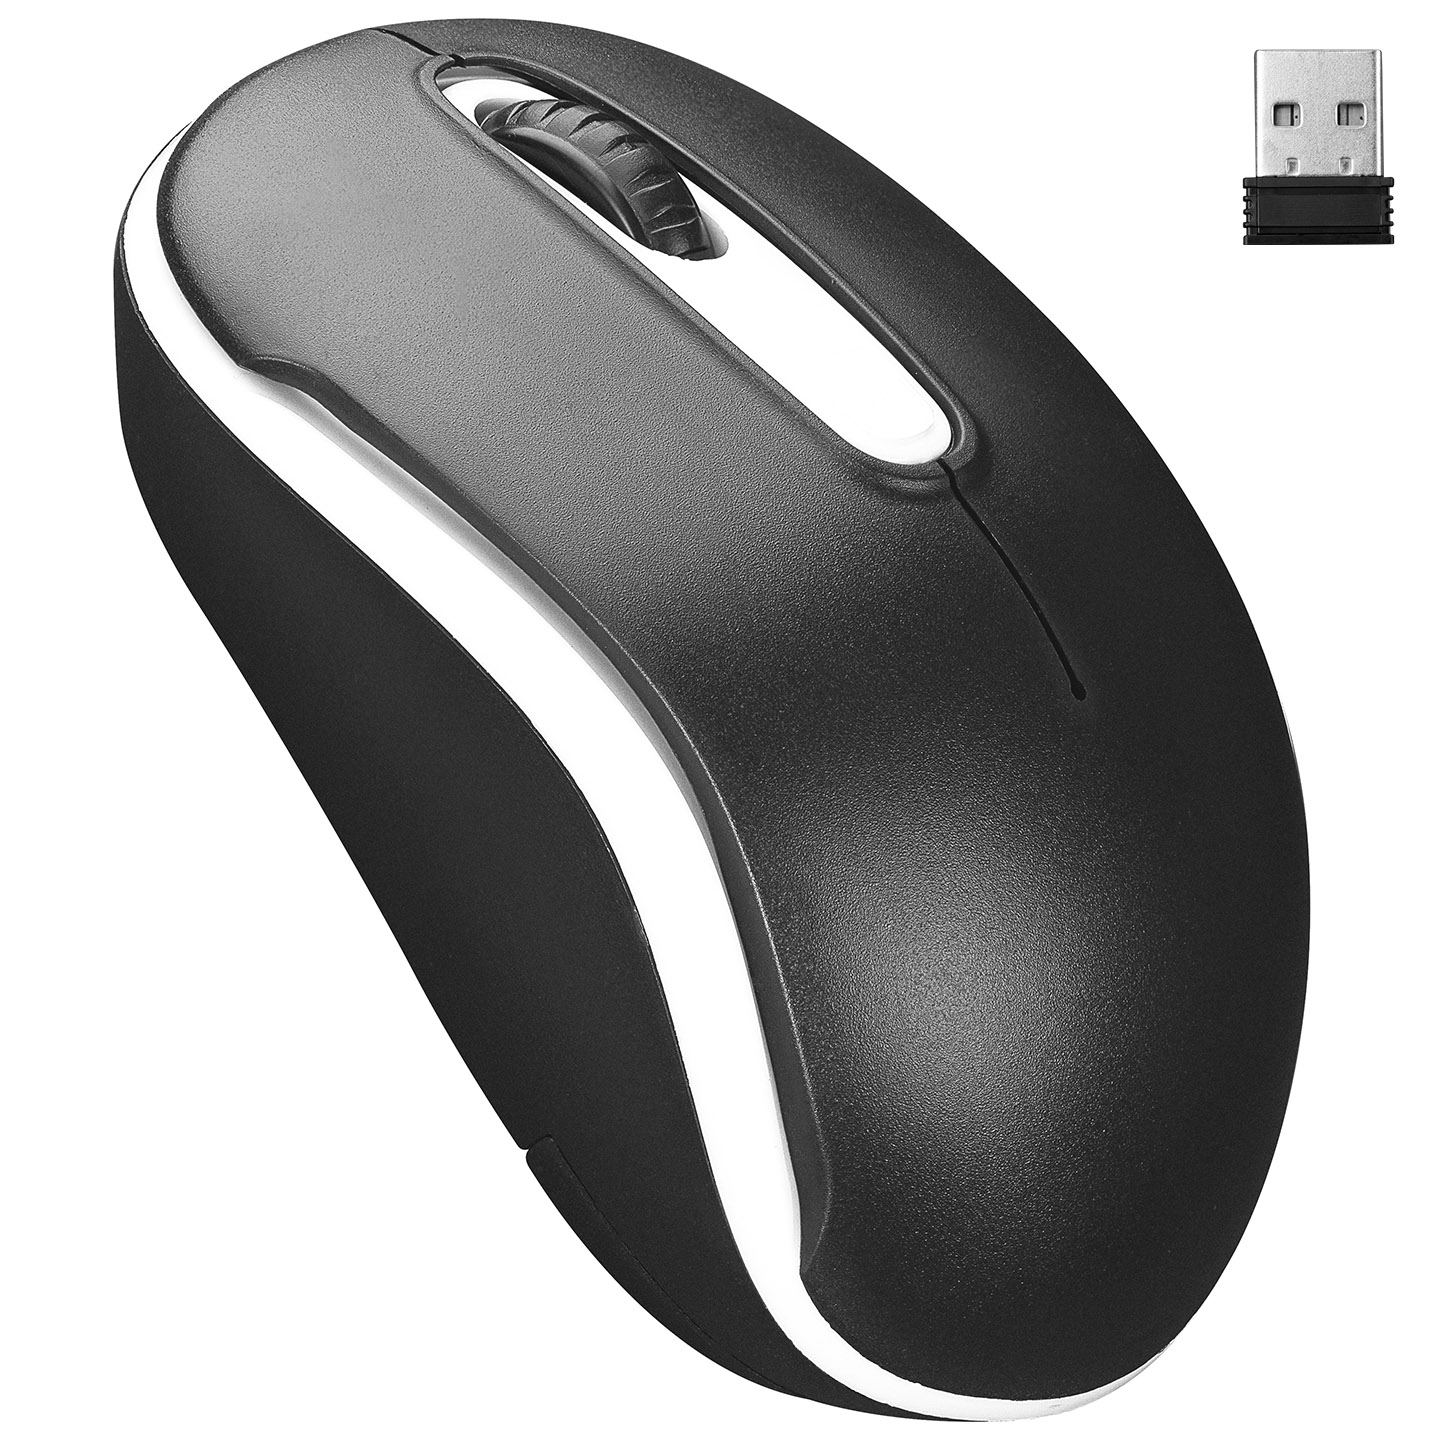 Everest SM-804 Usb Black / White 800/1200 / 1600dpi Wireless Mouse